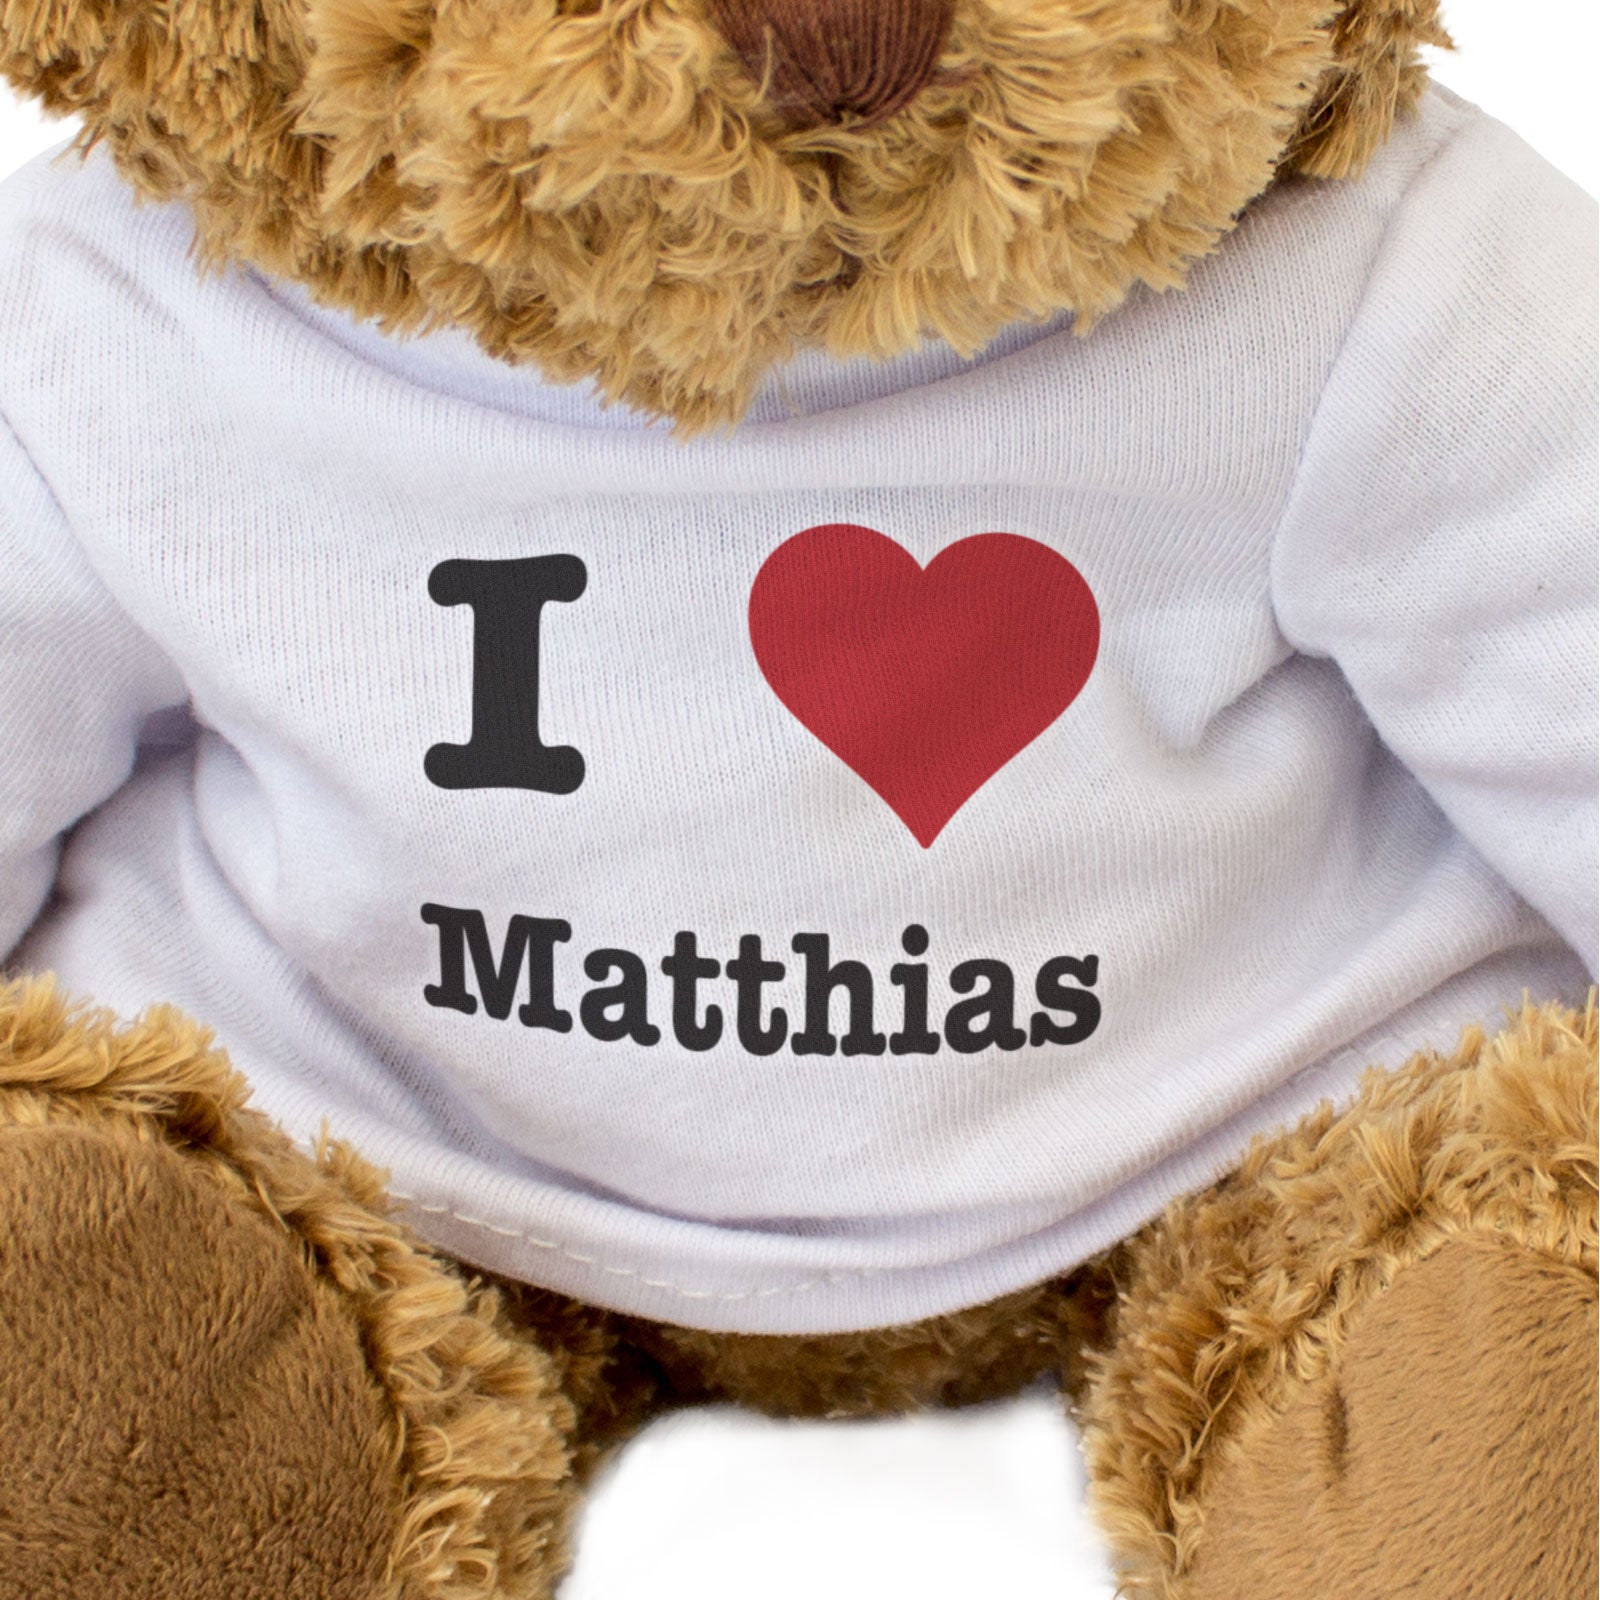 I Love Matthias - Teddy Bear